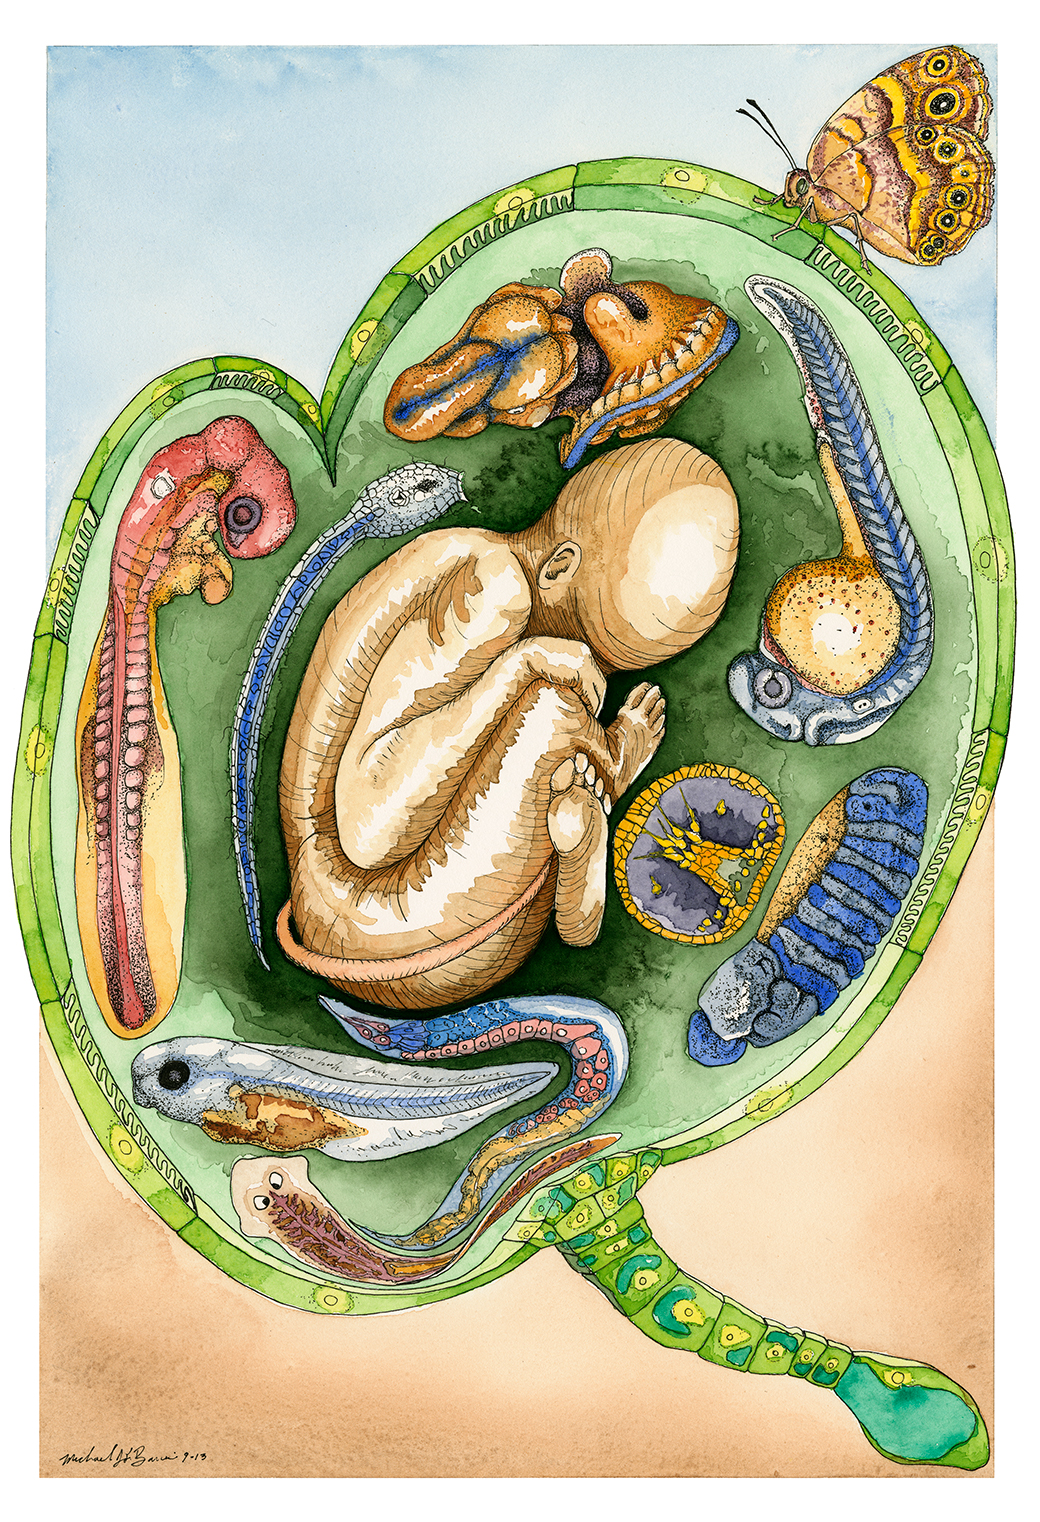  Michael Barresi's Developmental Biology Illustrated Video Series 